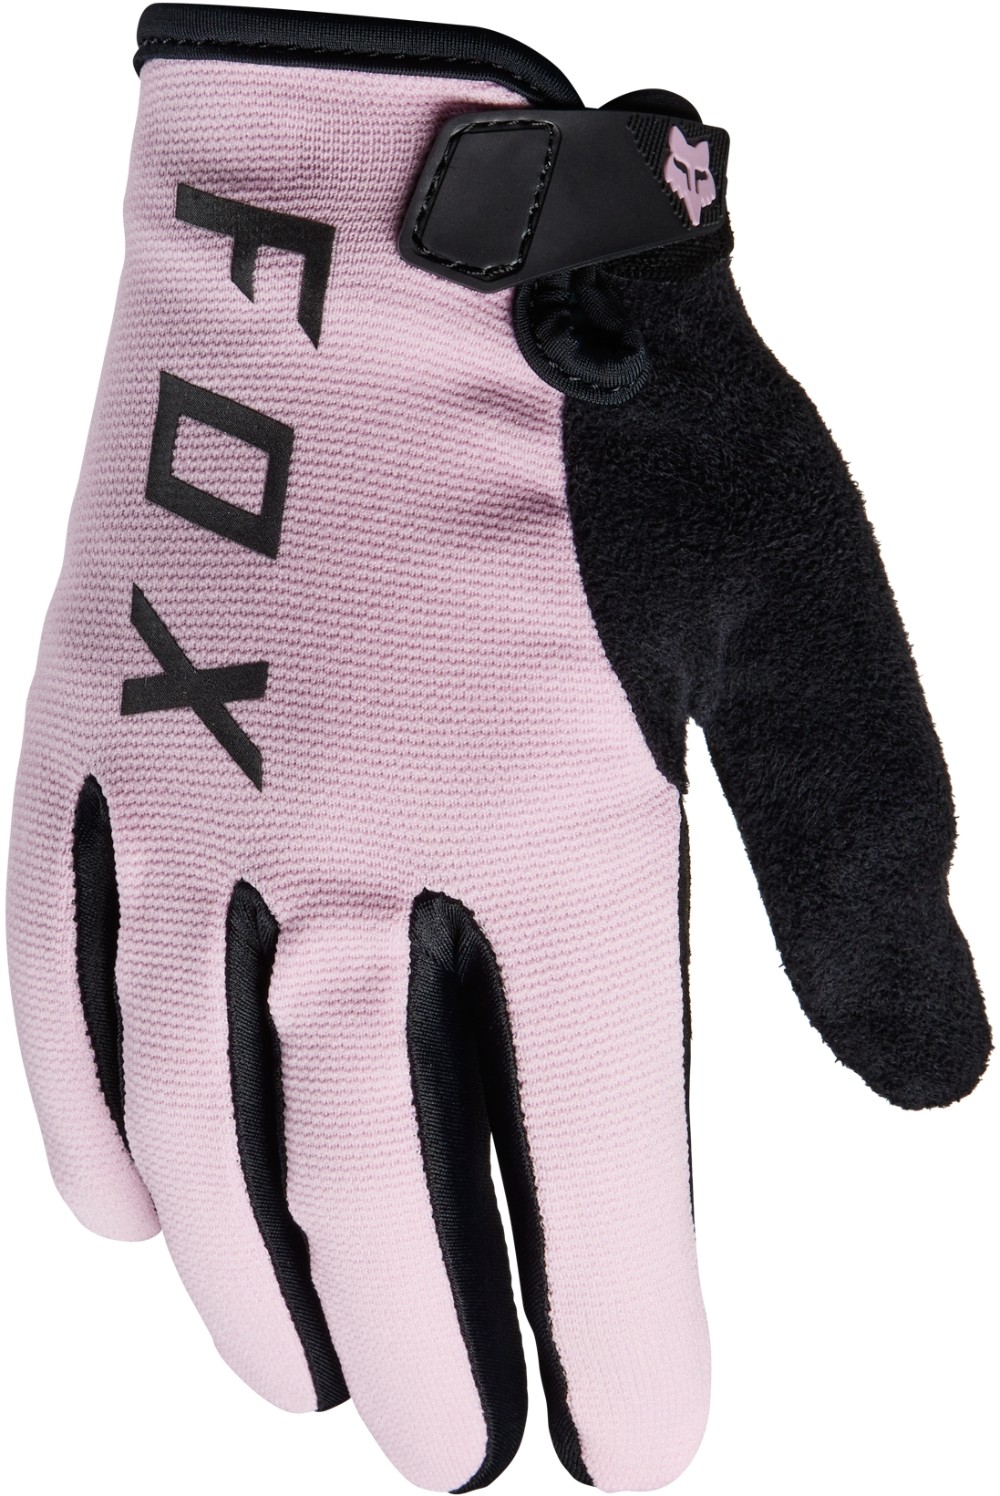 Ranger Womens Long Finger MTB Cycling Gloves Gel image 0